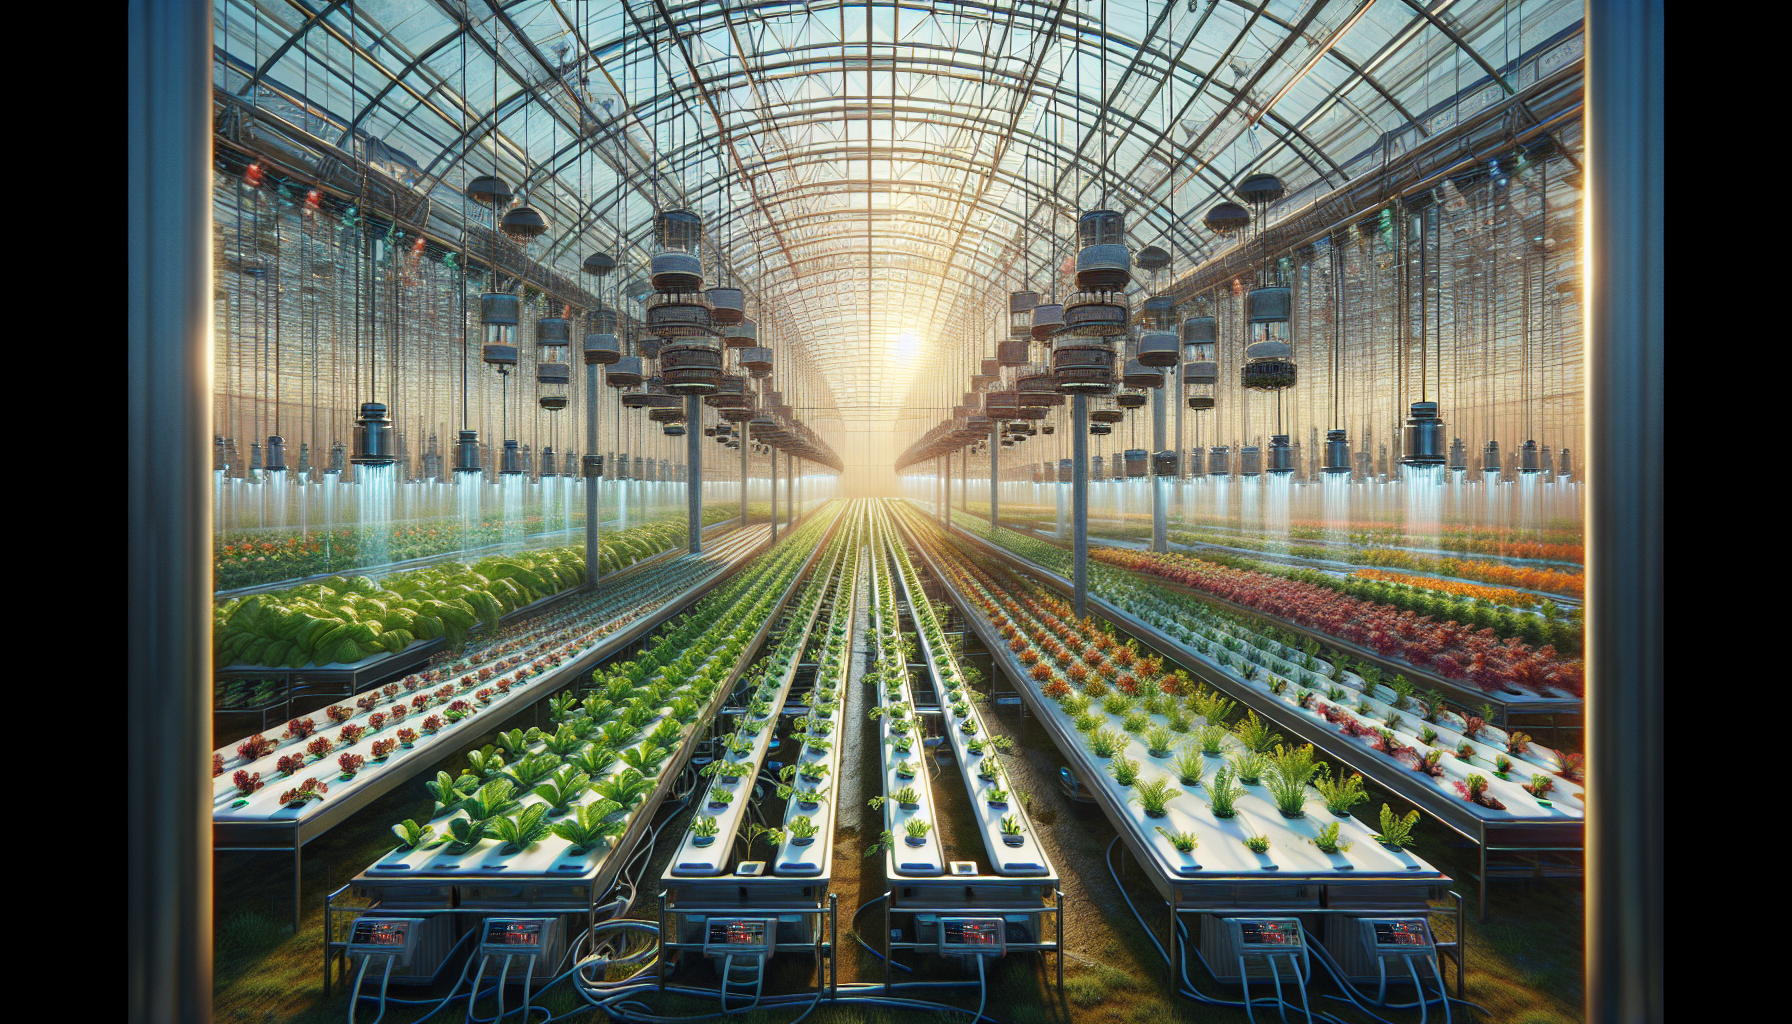 Hydroponics: The Future of Greenhouse Gardening